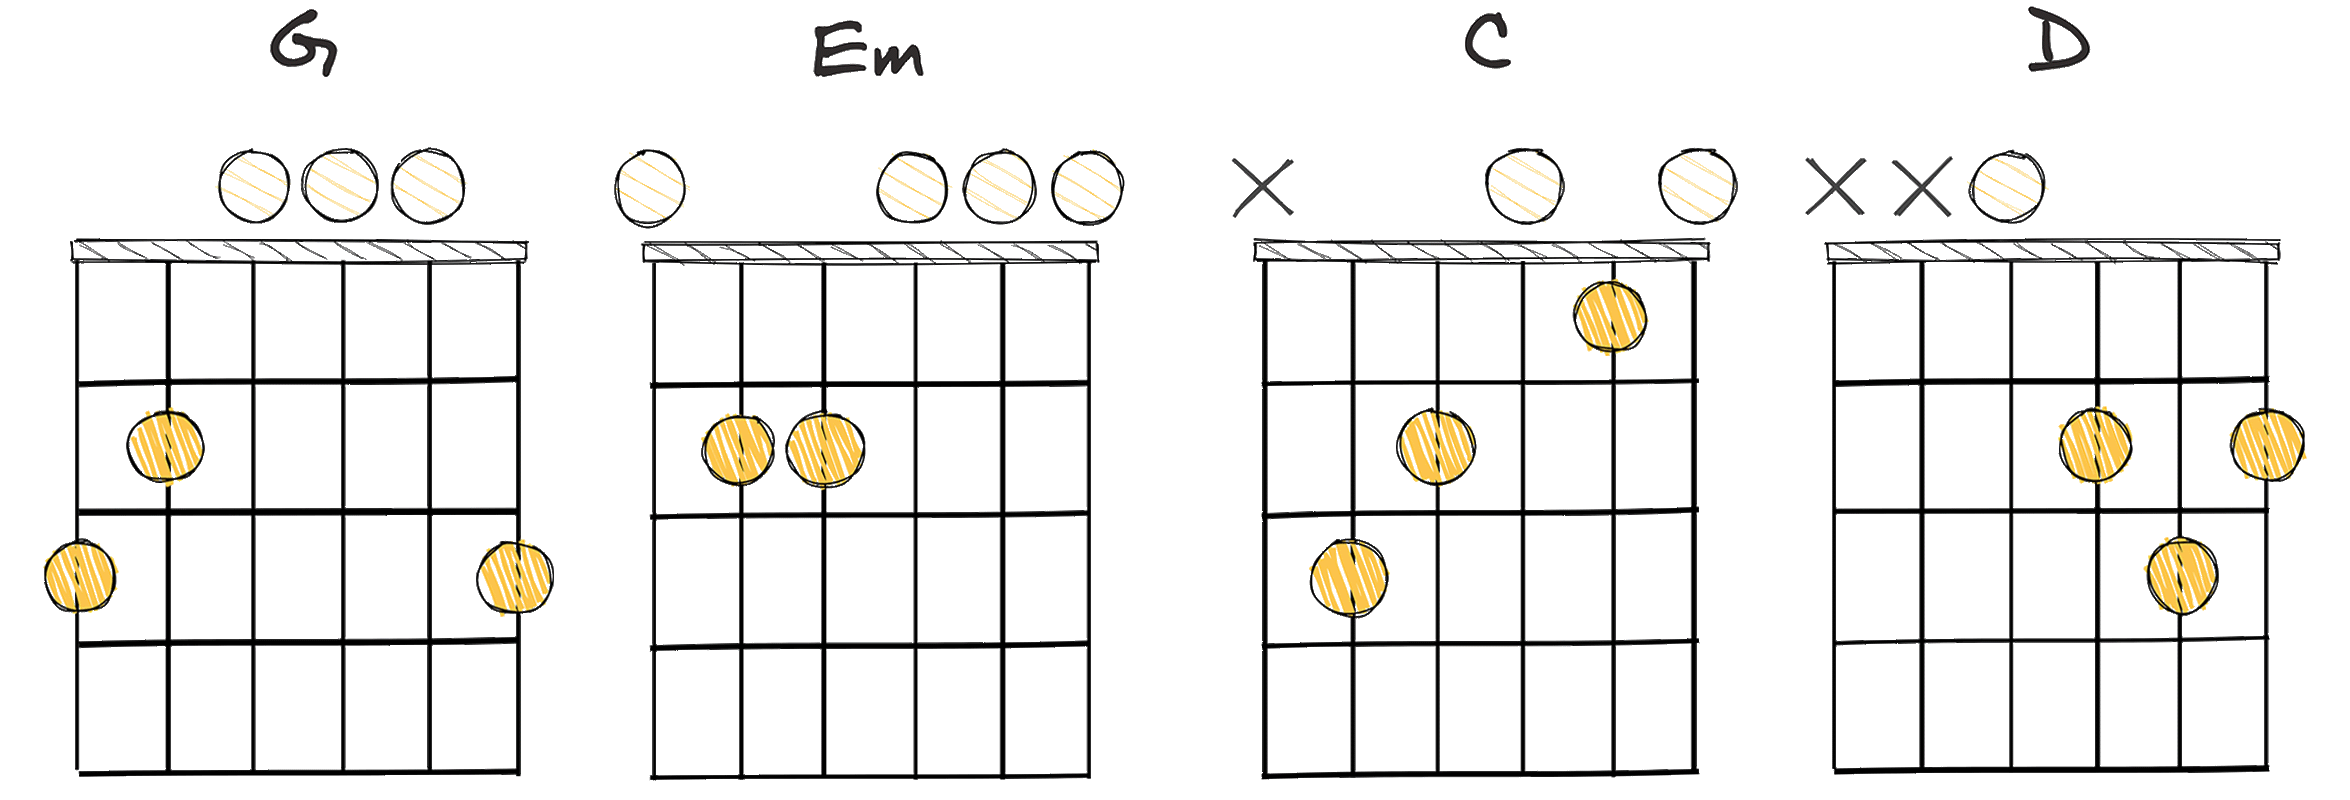 I-vi-IV-V (1-6-4-5) chords diagram